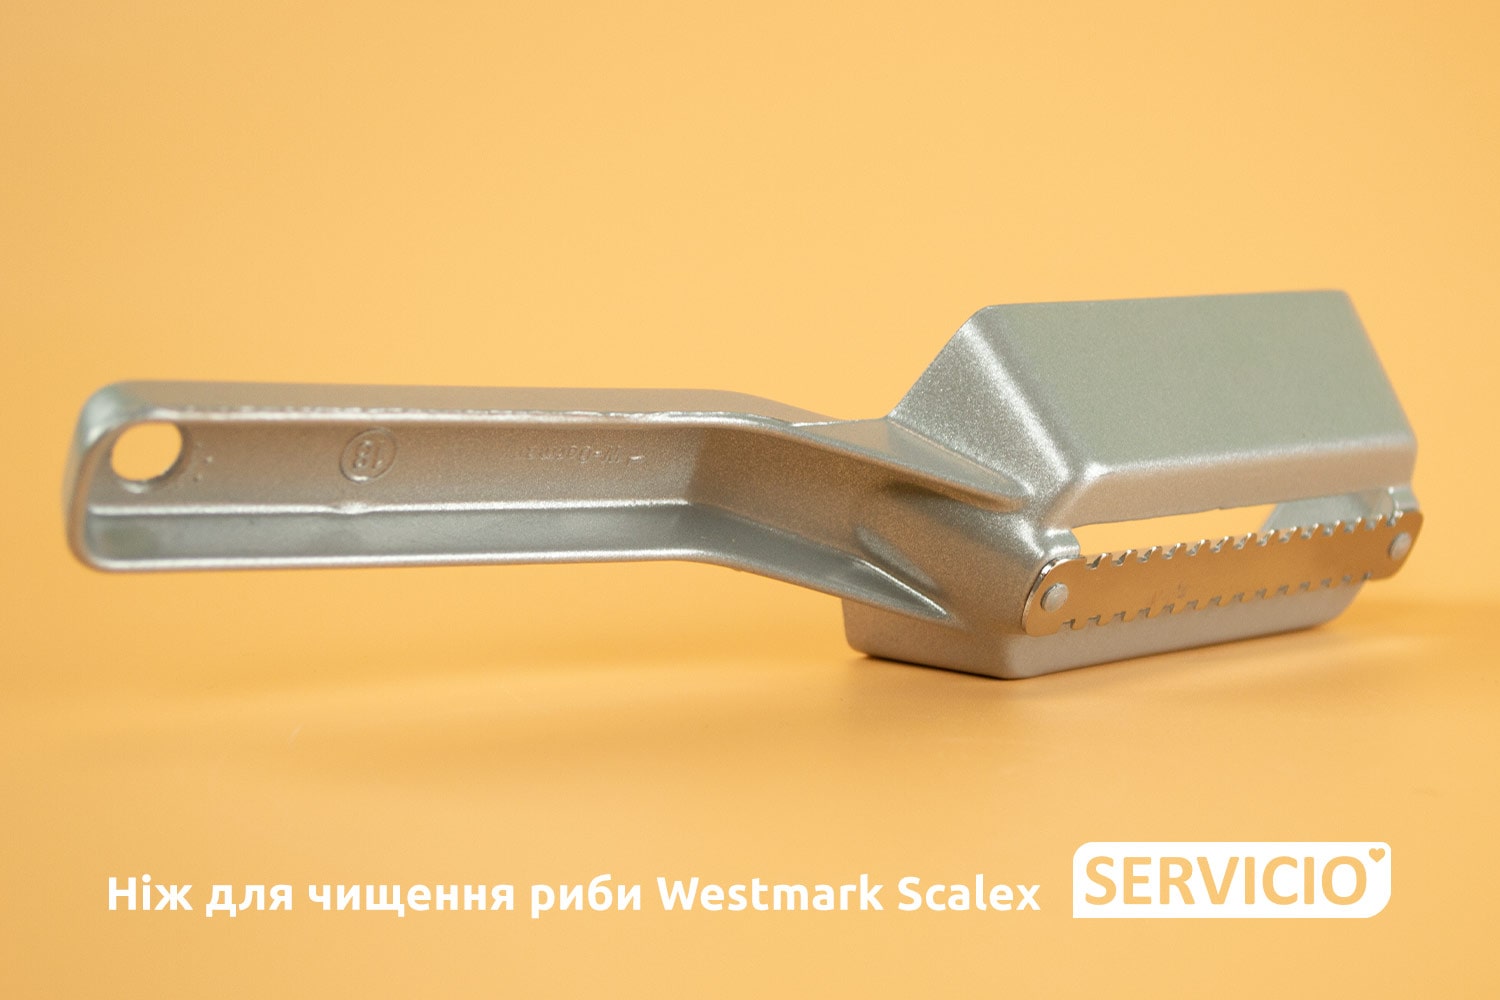 Westmark Scalex 65002260